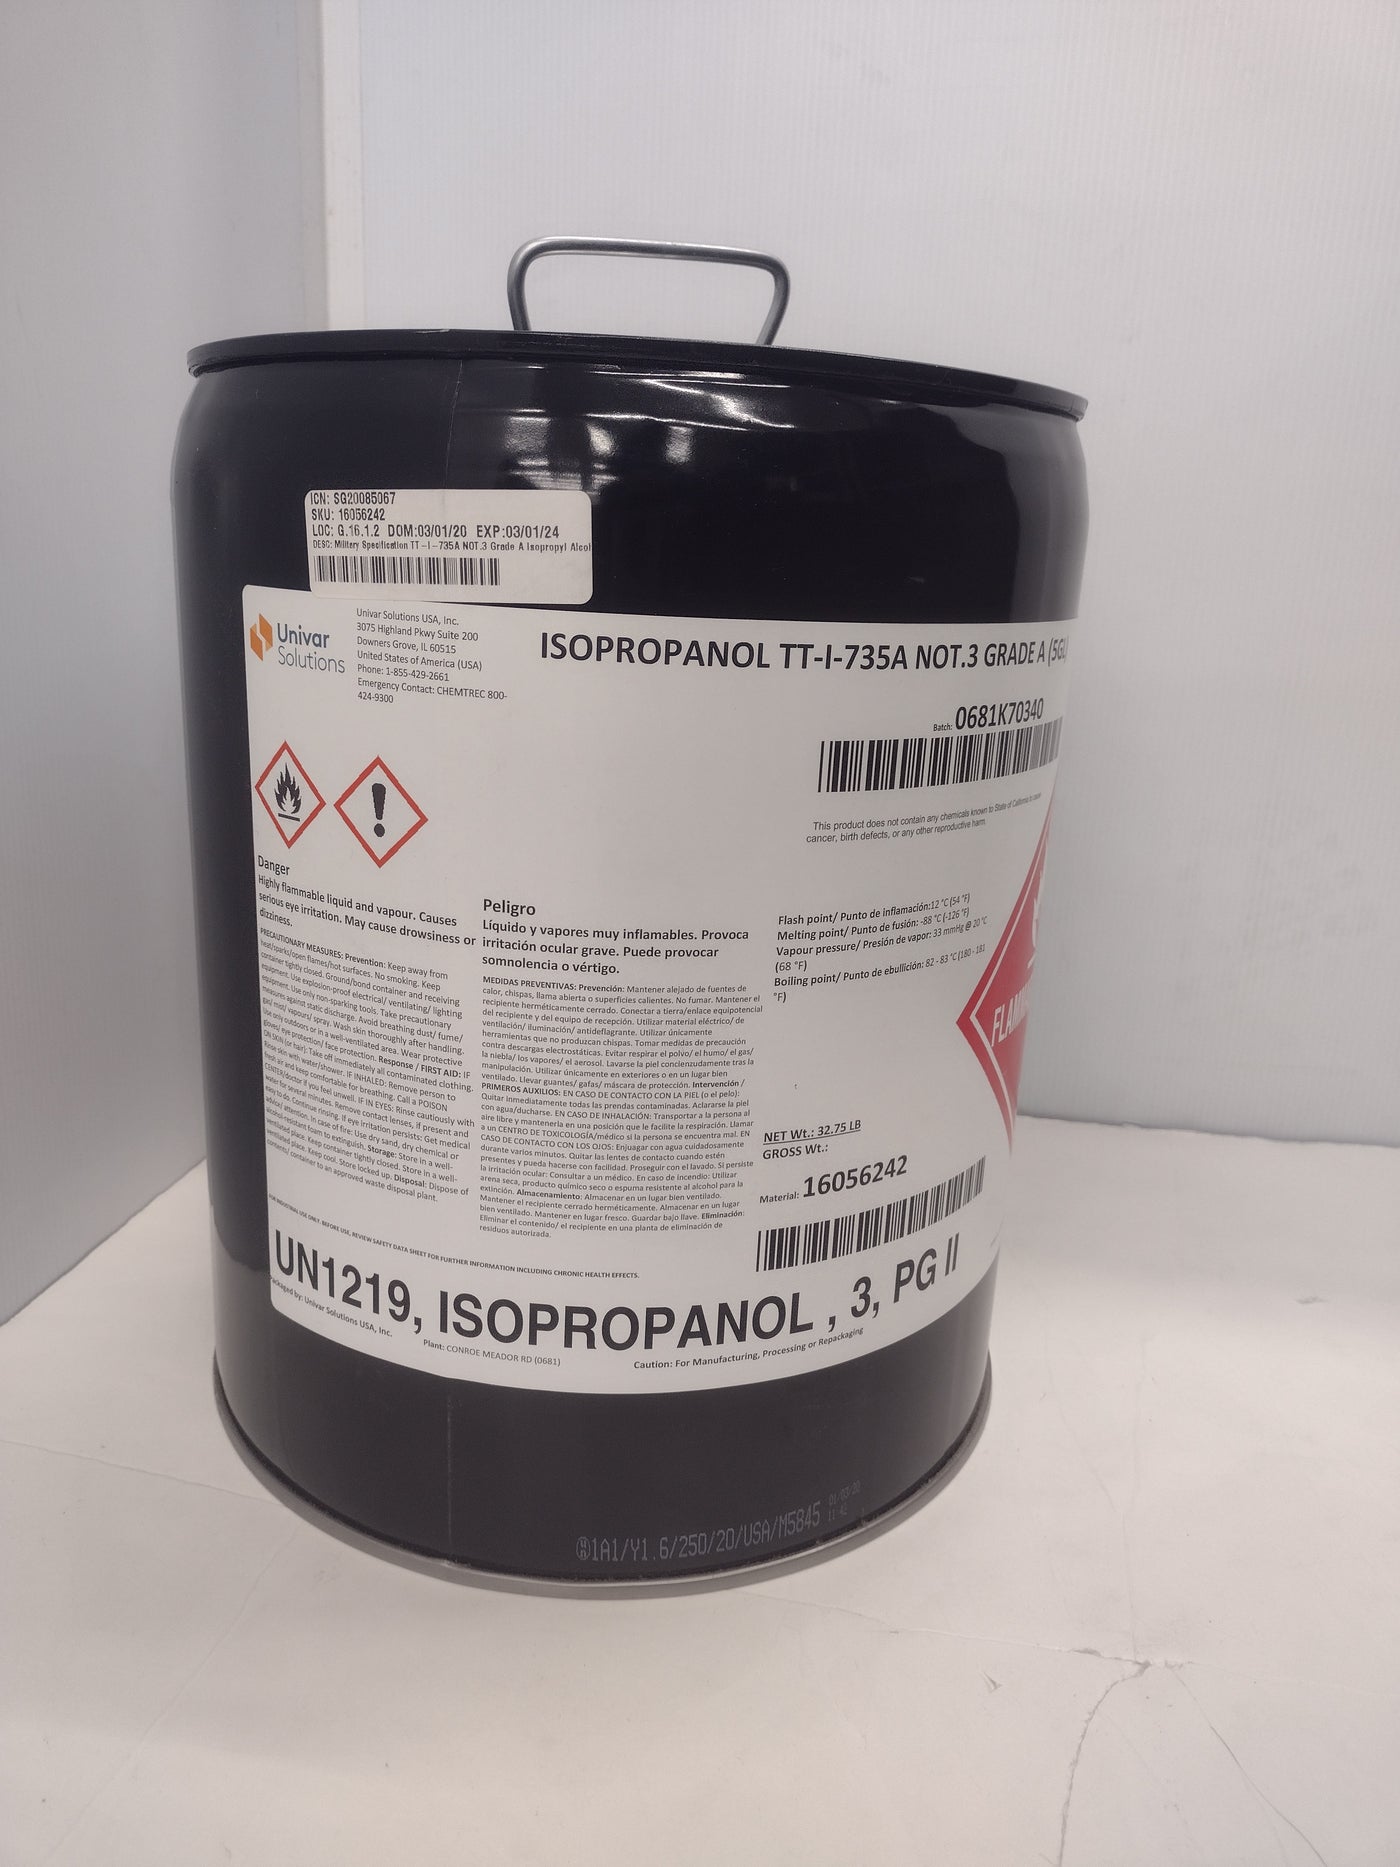 Quality Chemical Company - Isopropyl Alcohol (IPA)